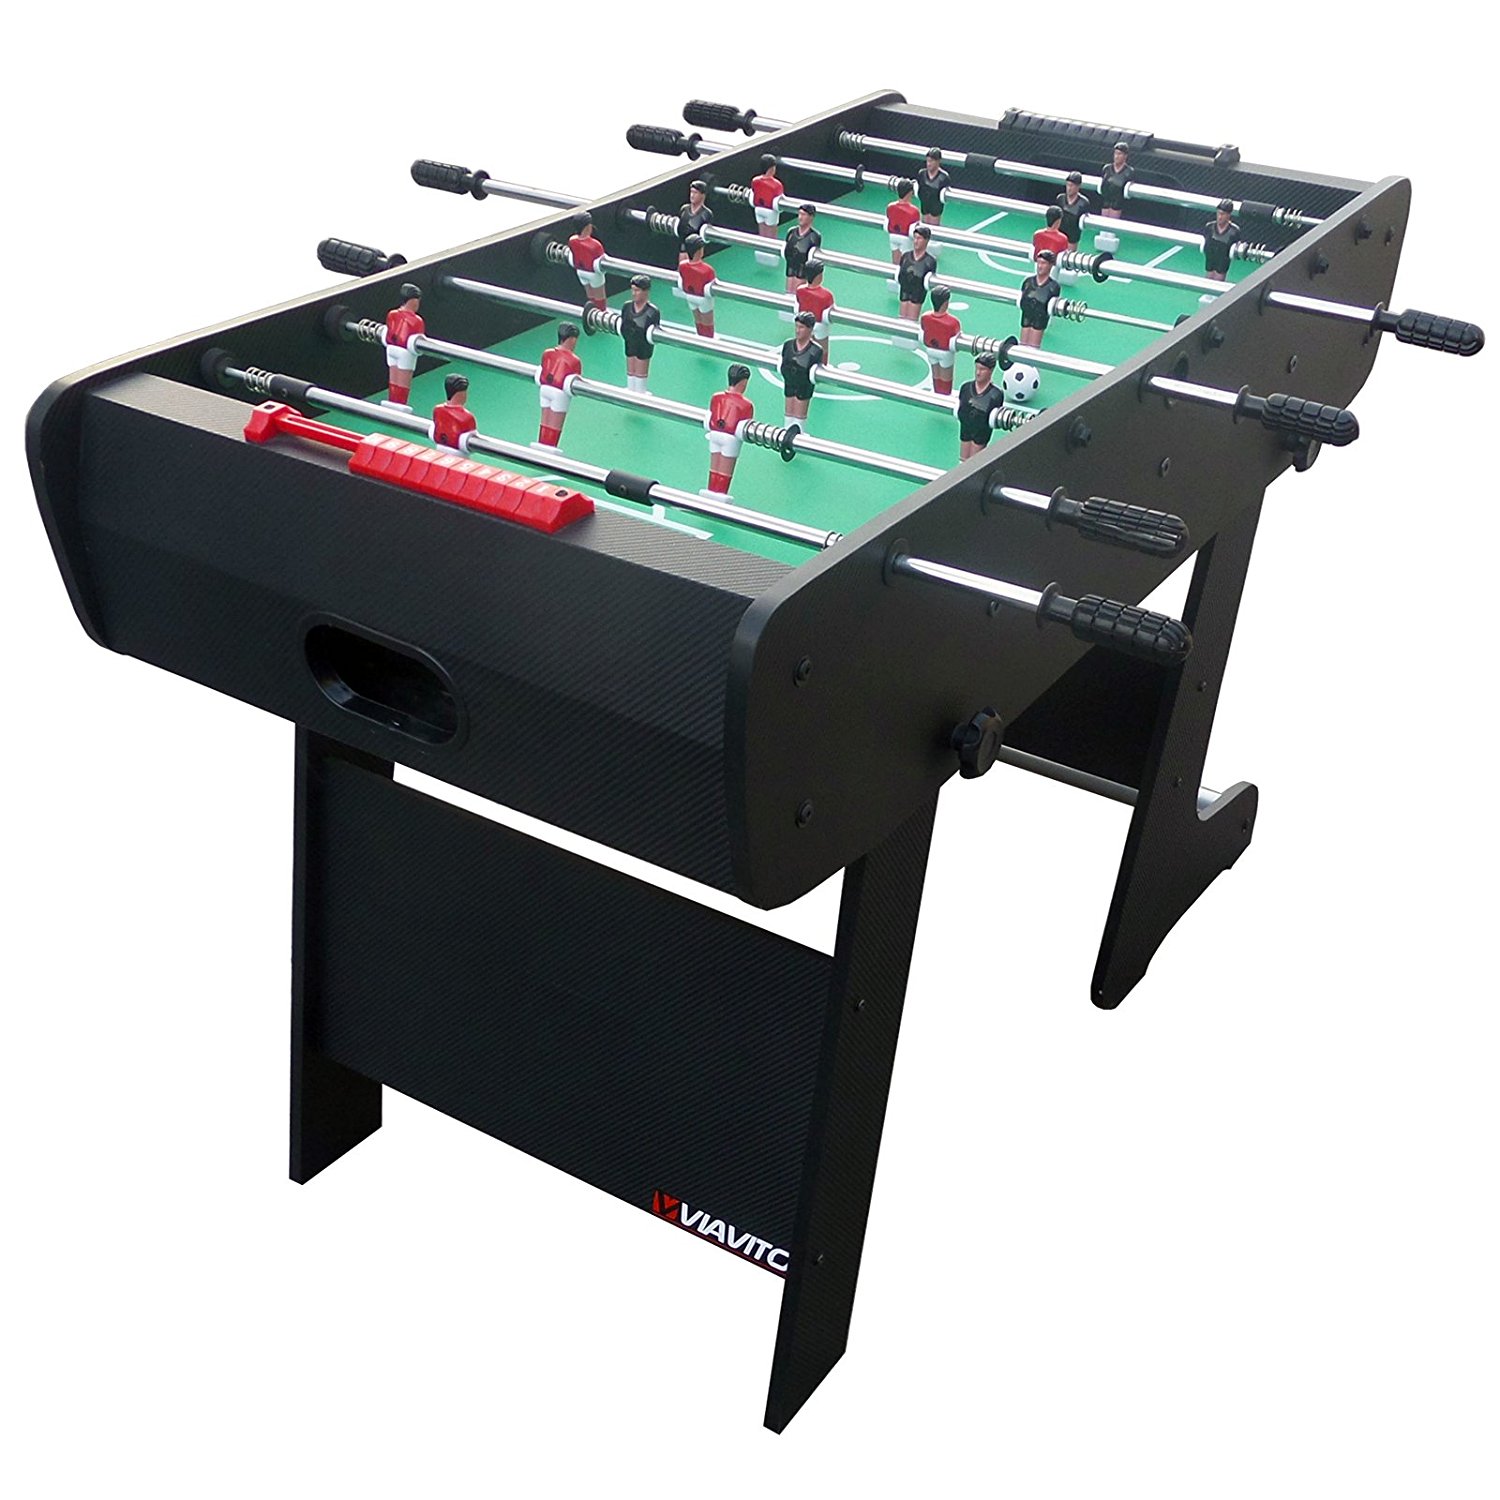 Amazon.com : Viavito FT100X Folding Football Table - Black/Green ...